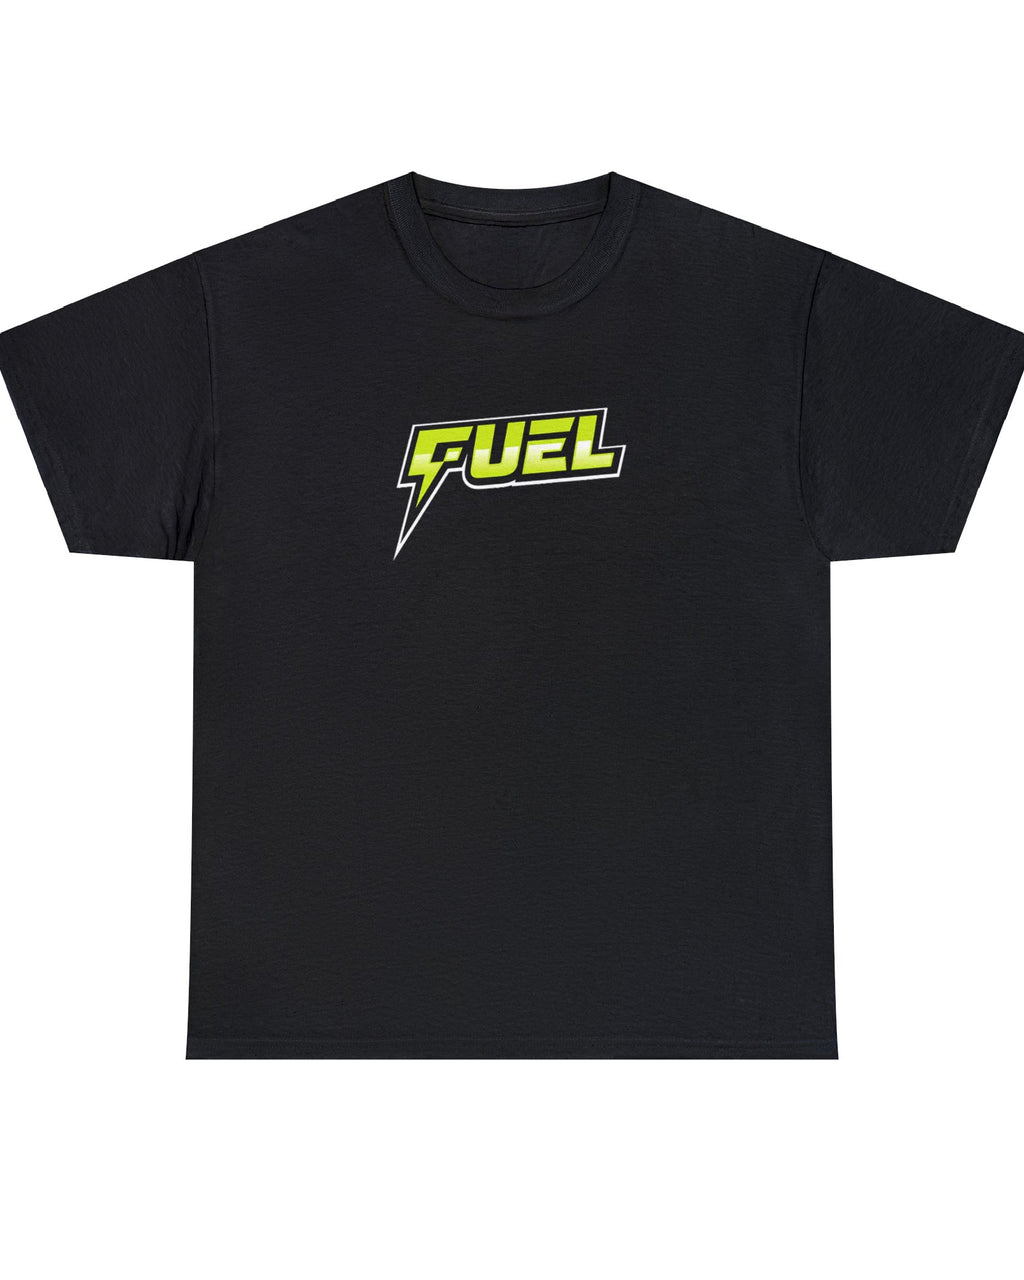 SHC Home Shirt – Fuel Sports